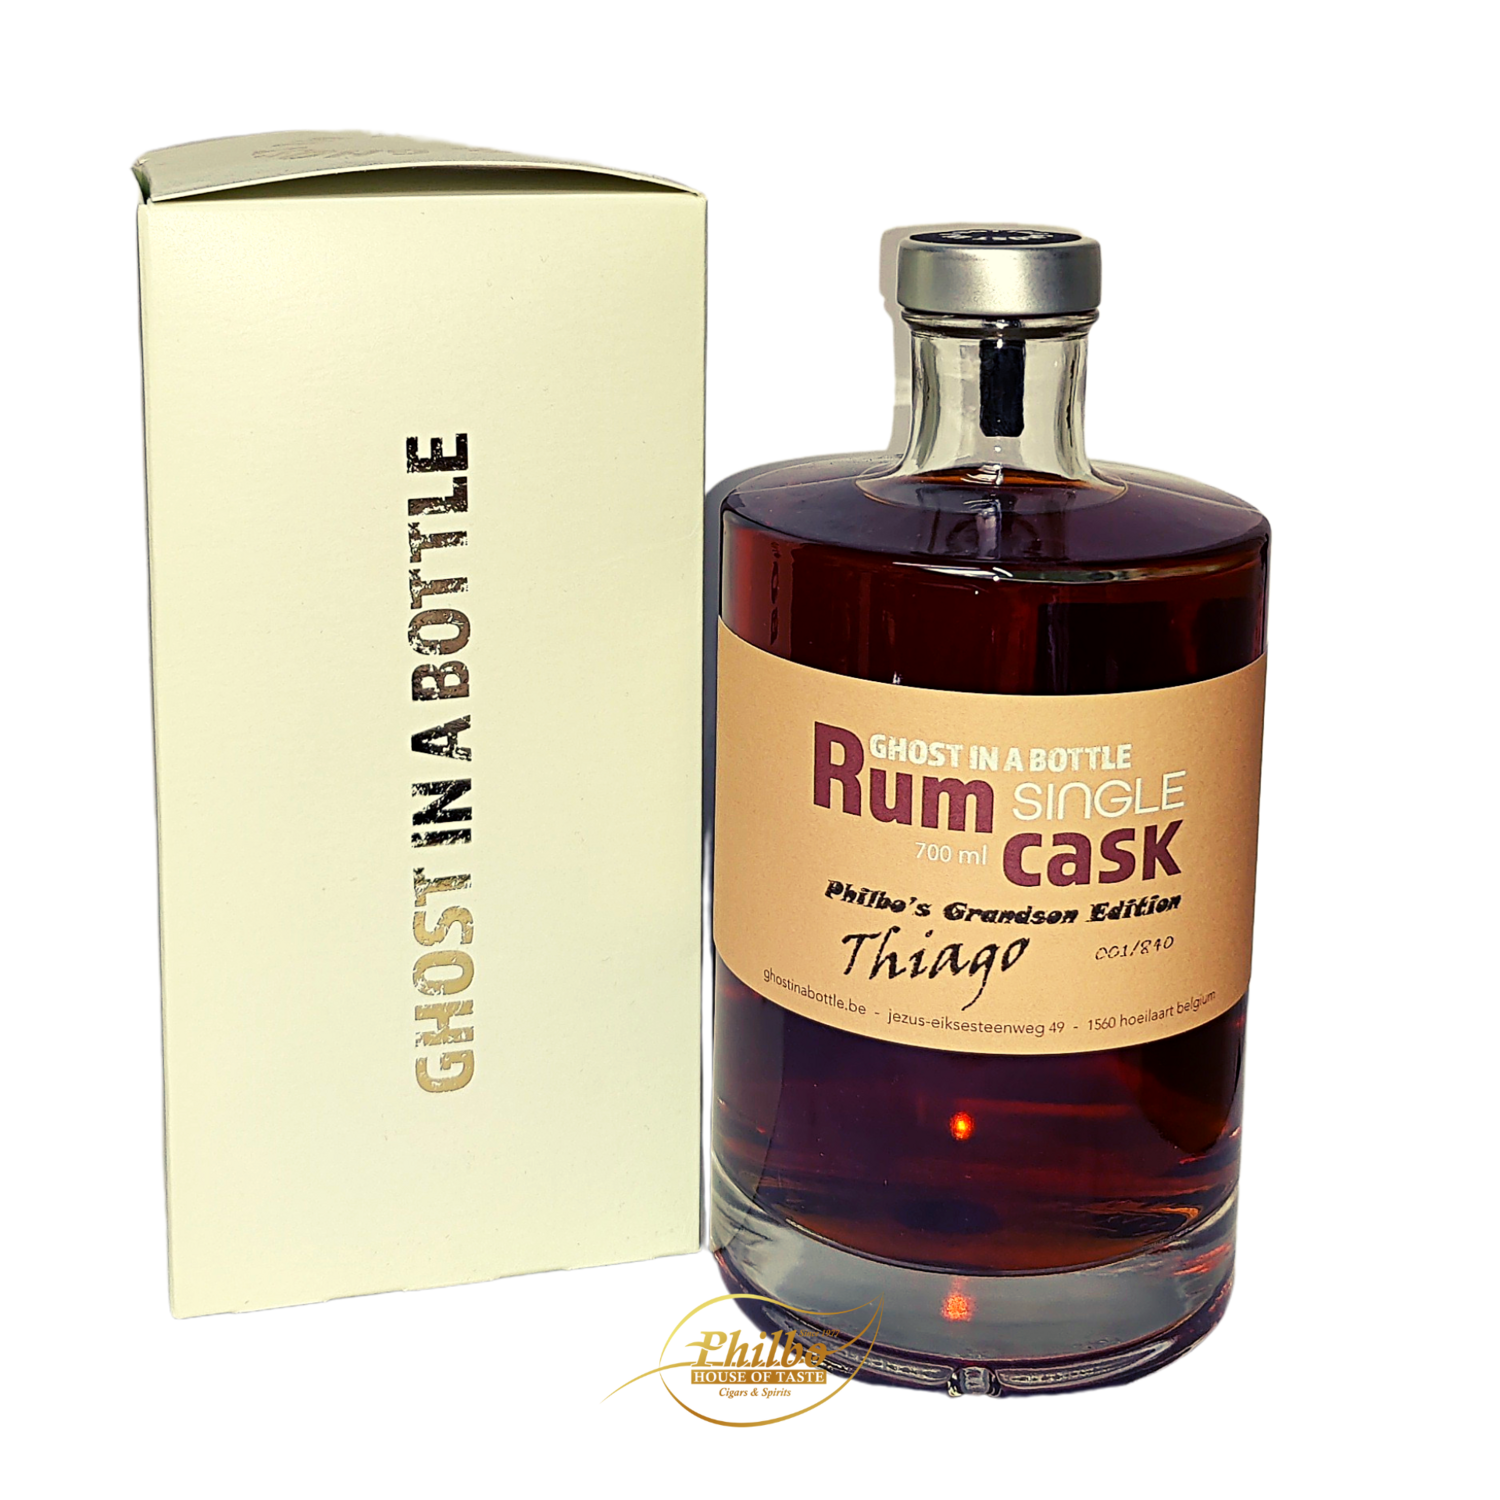 Rum Ghost in a bottle - 58% - cask strength - Exclusive bottling Philbo's grandson - Slechts 24 genummerde flessen